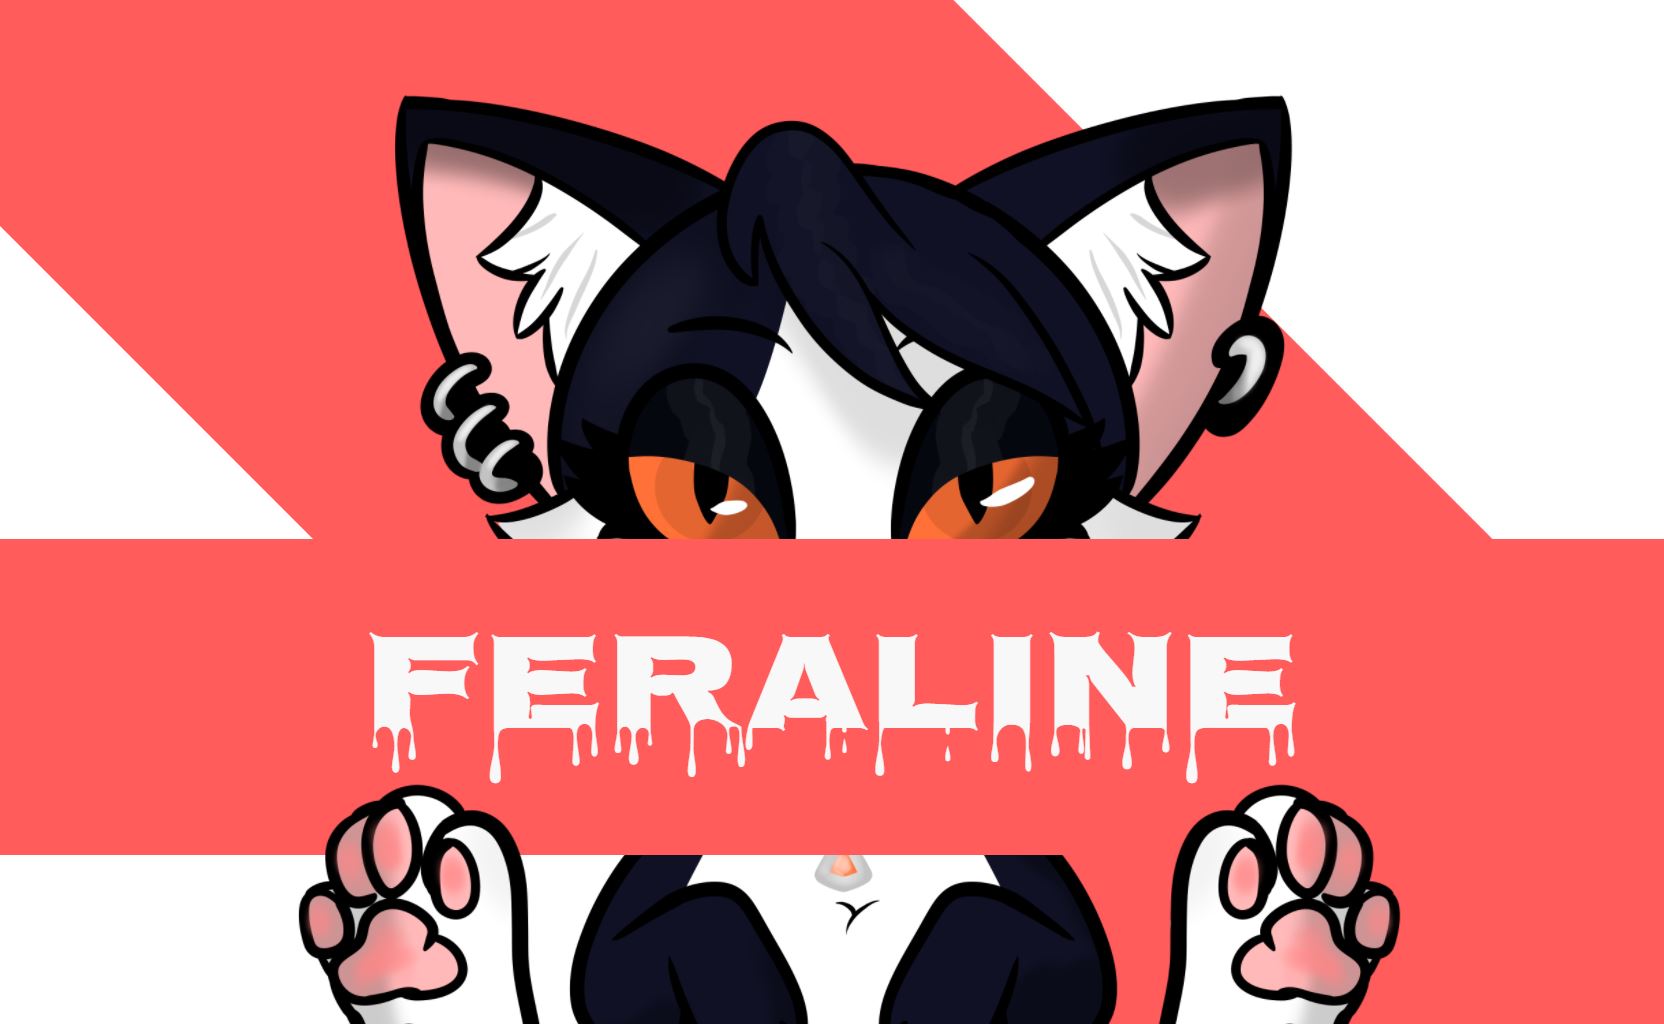 Feraline porn xxx game download cover